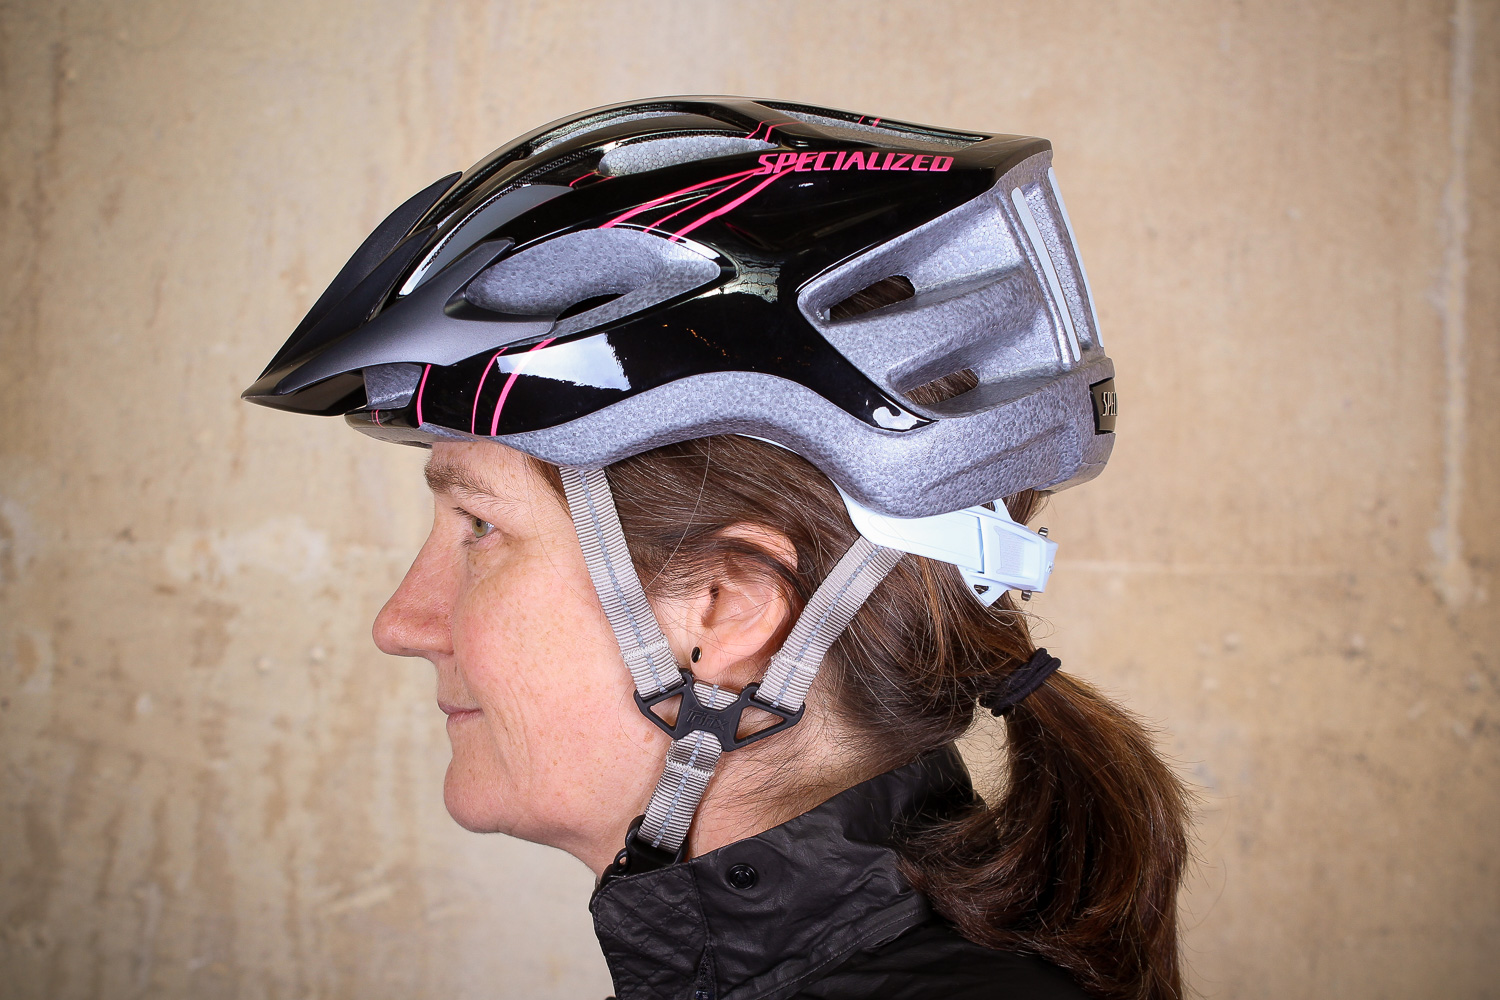 specialised cycle helmets